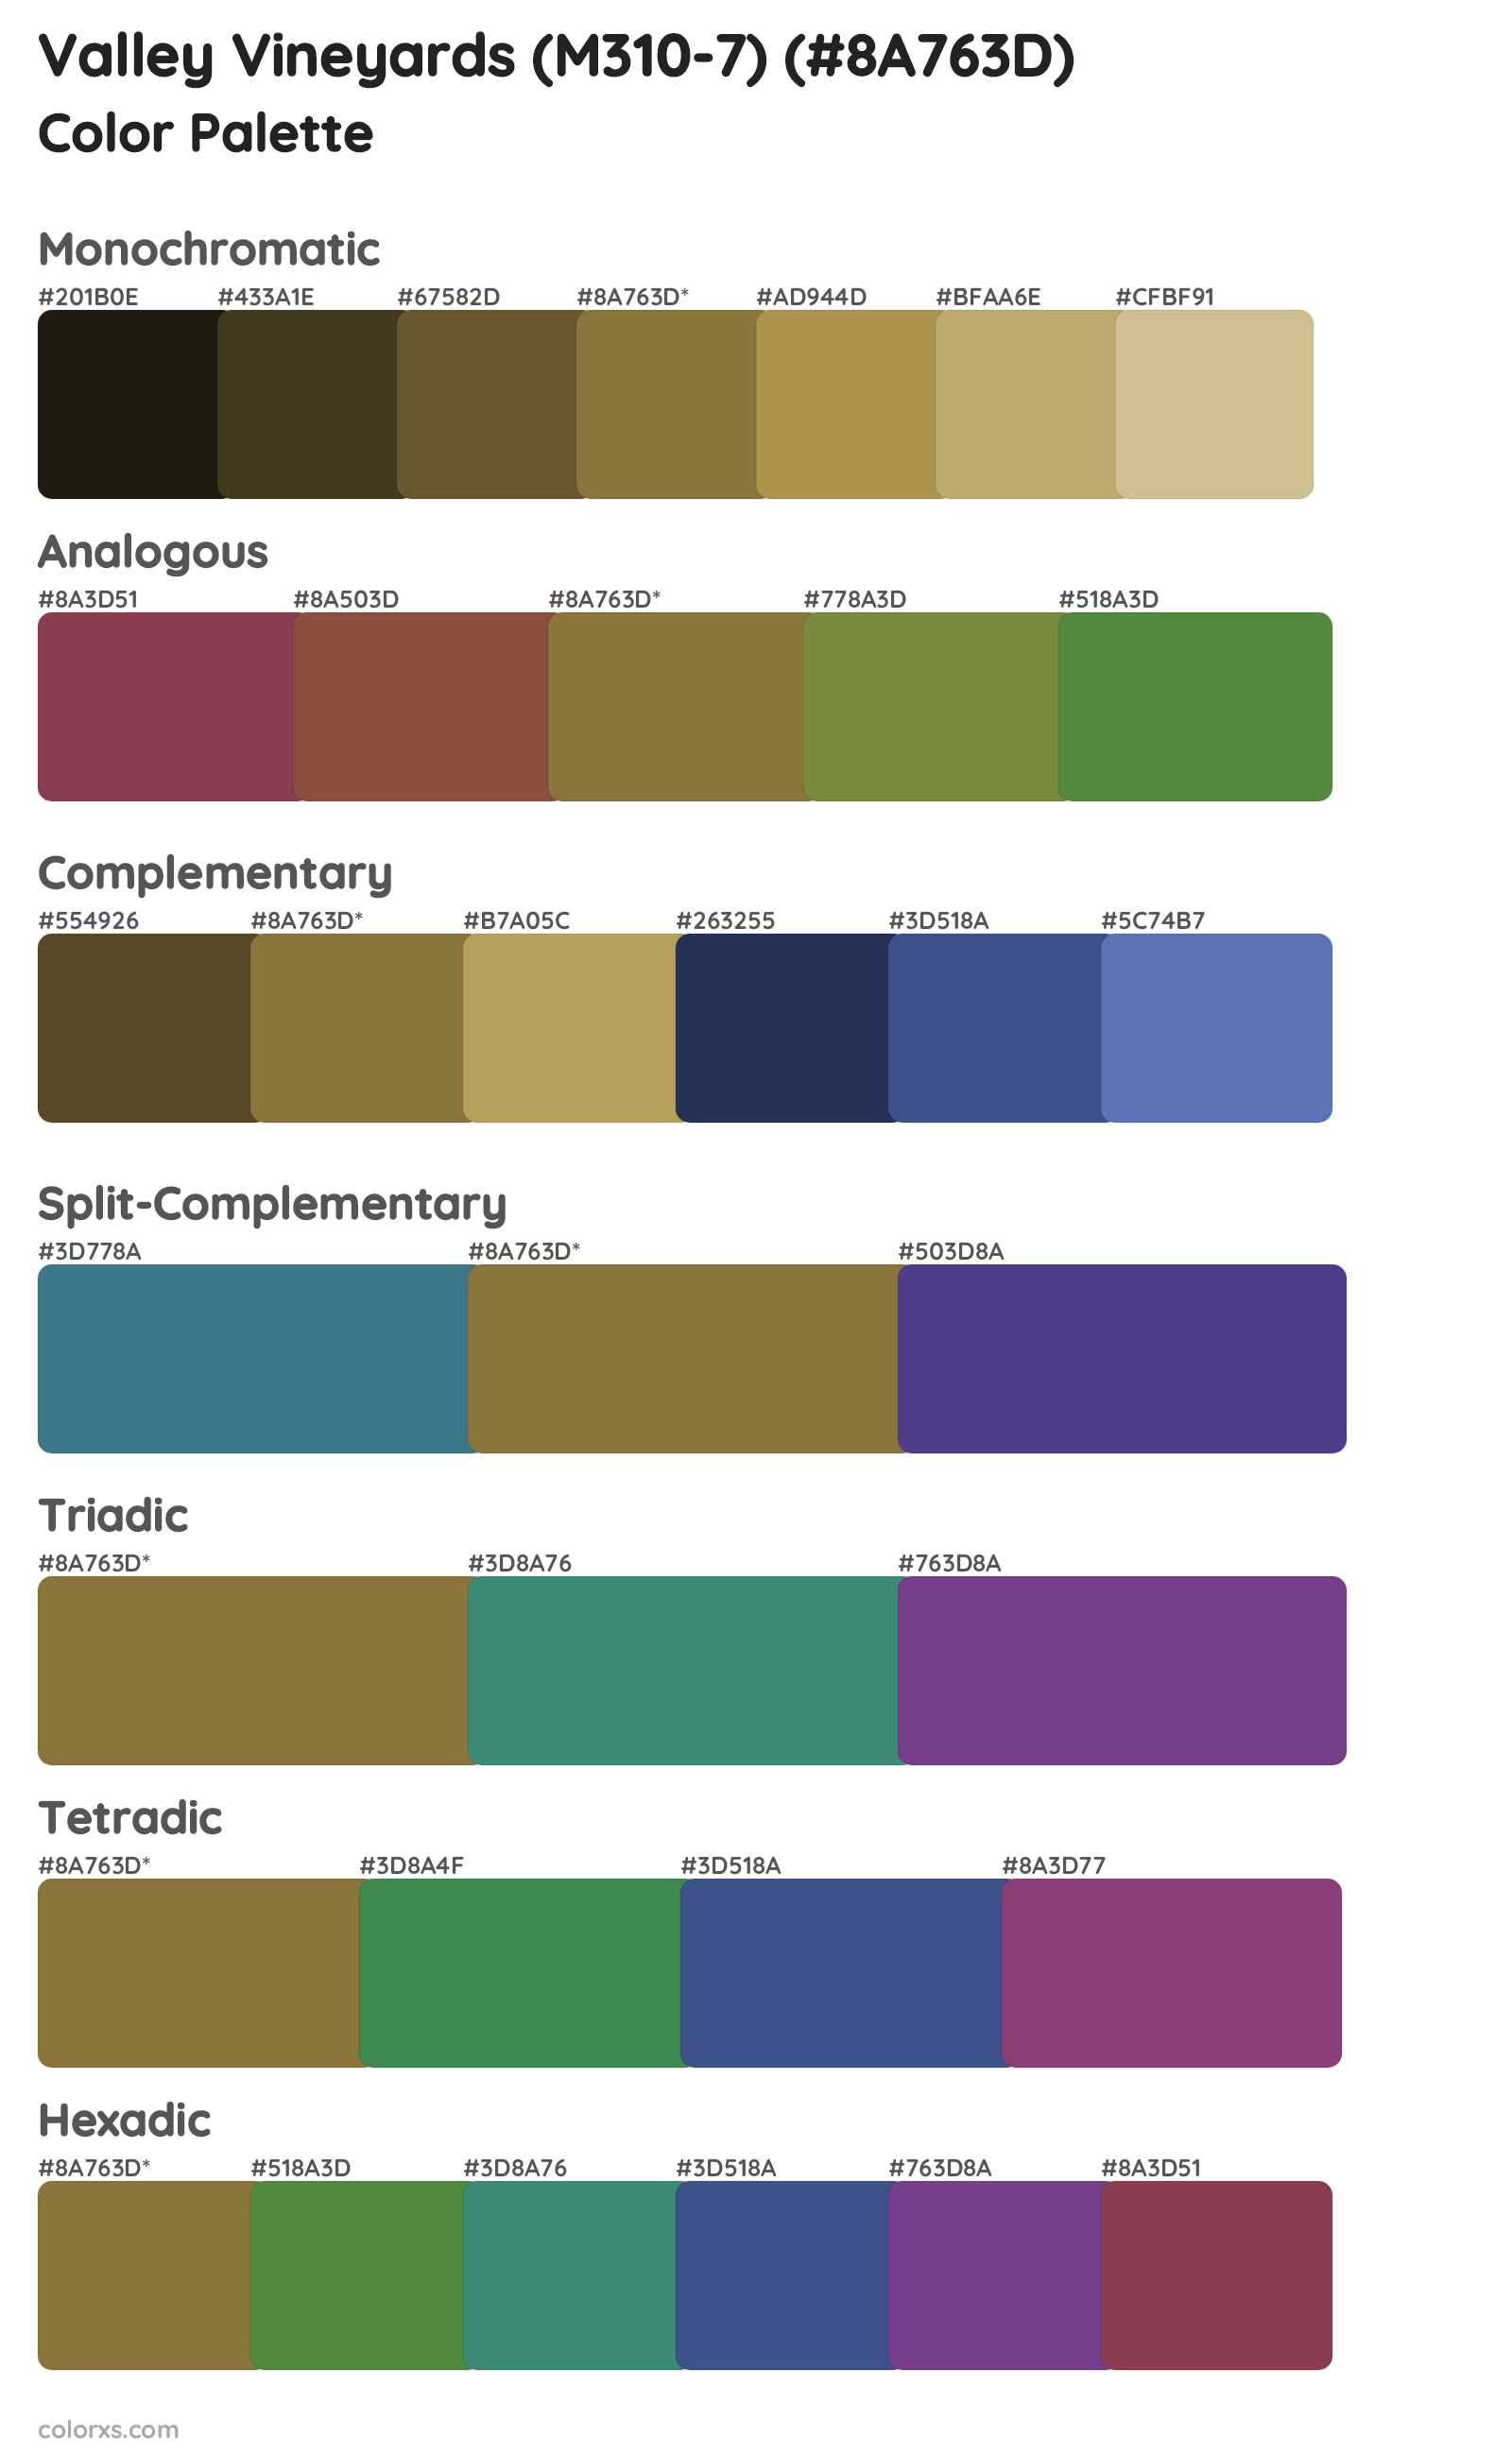 Valley Vineyards (M310-7) Color Scheme Palettes